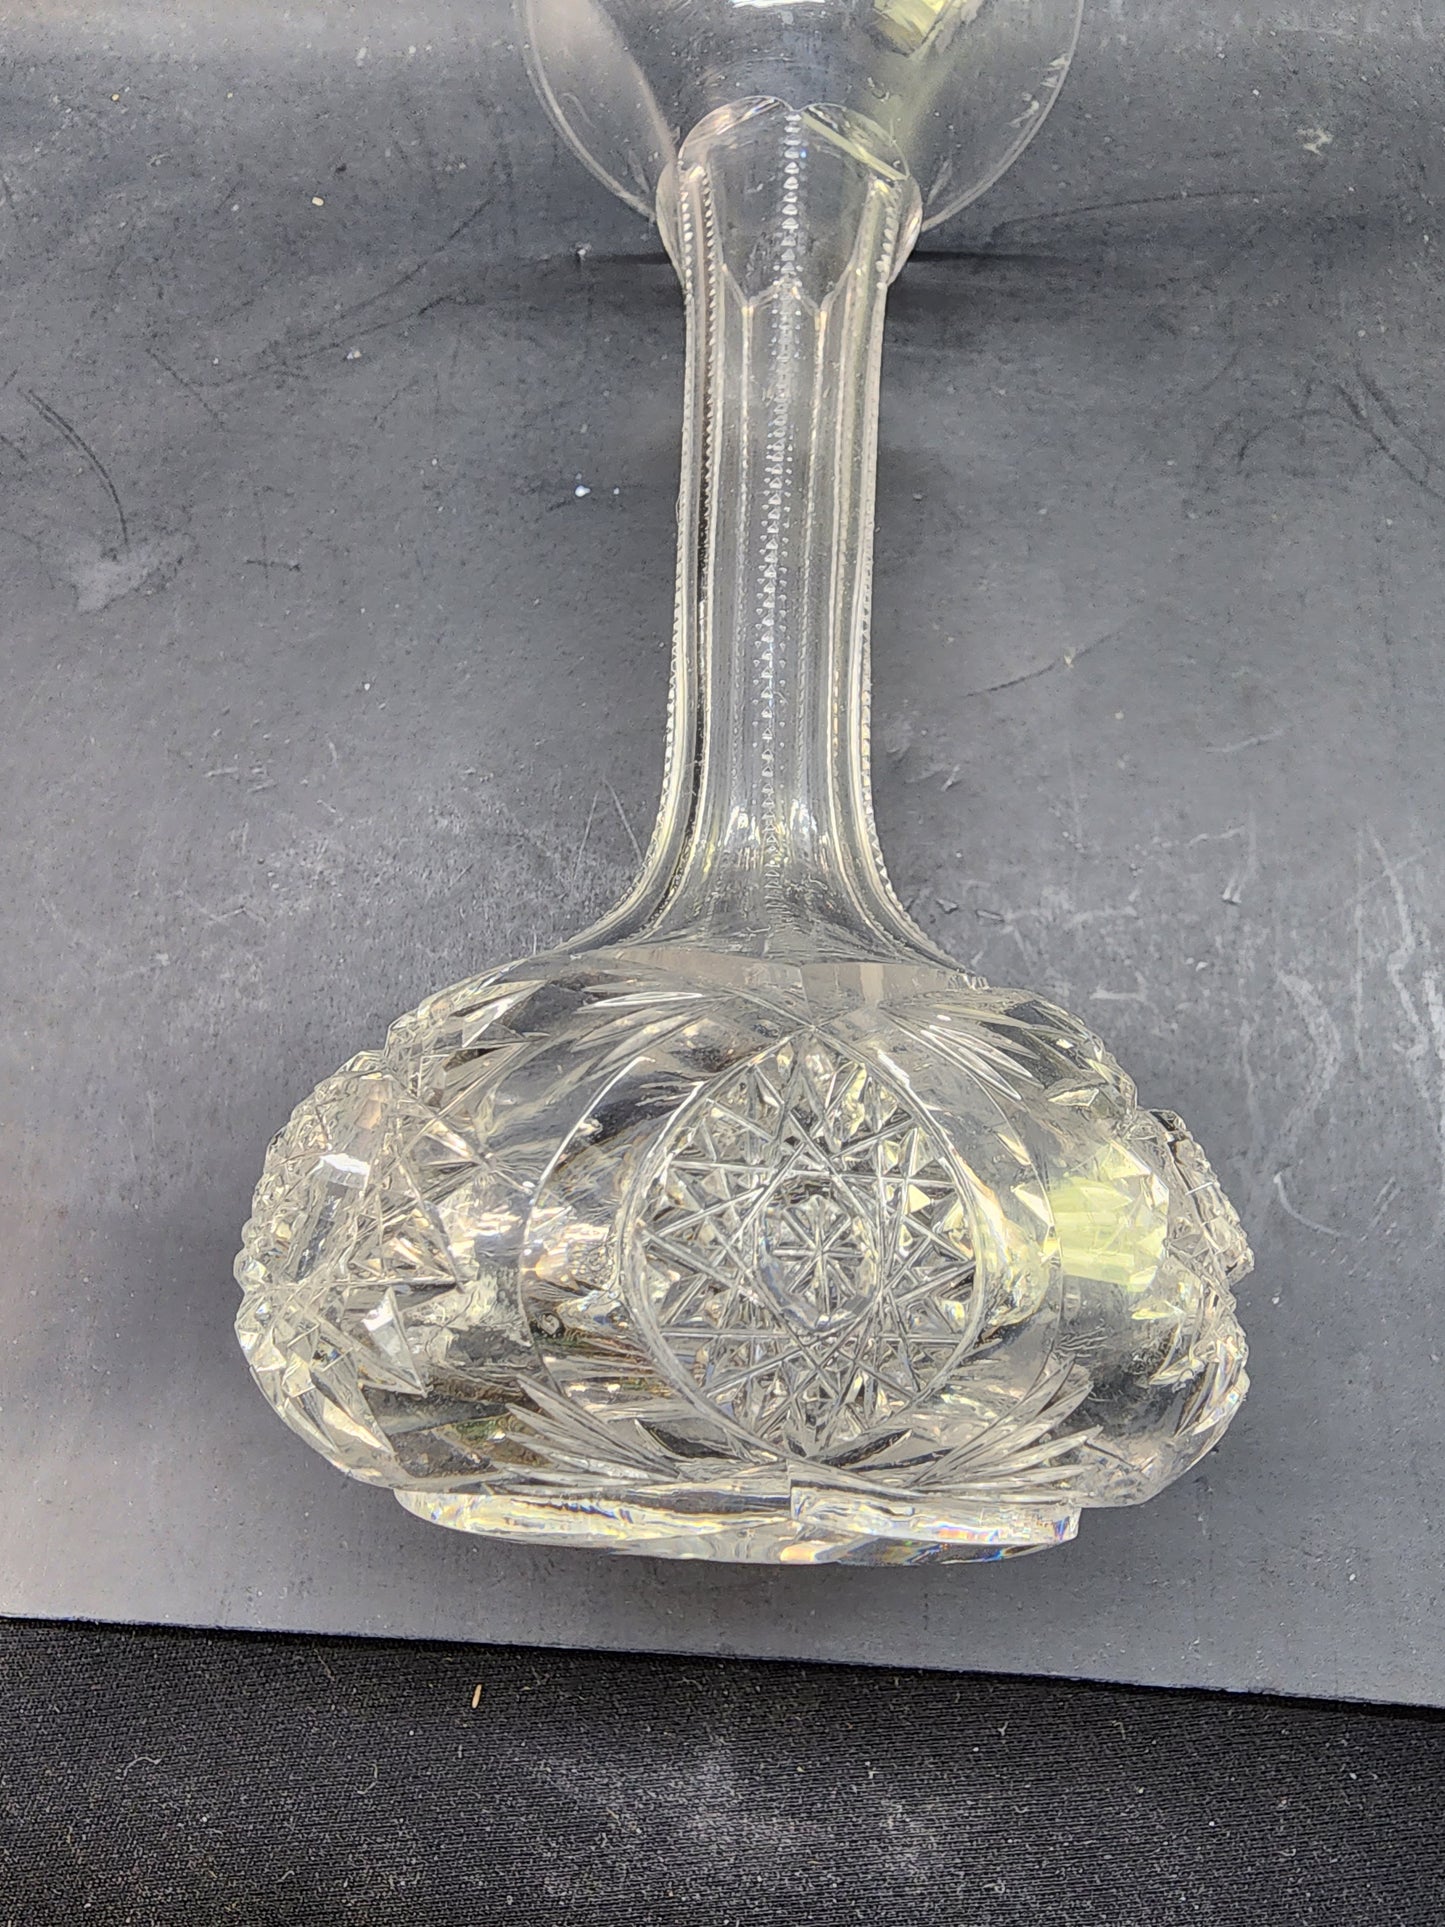 ABP cut glass vase antique fluted neck Adm